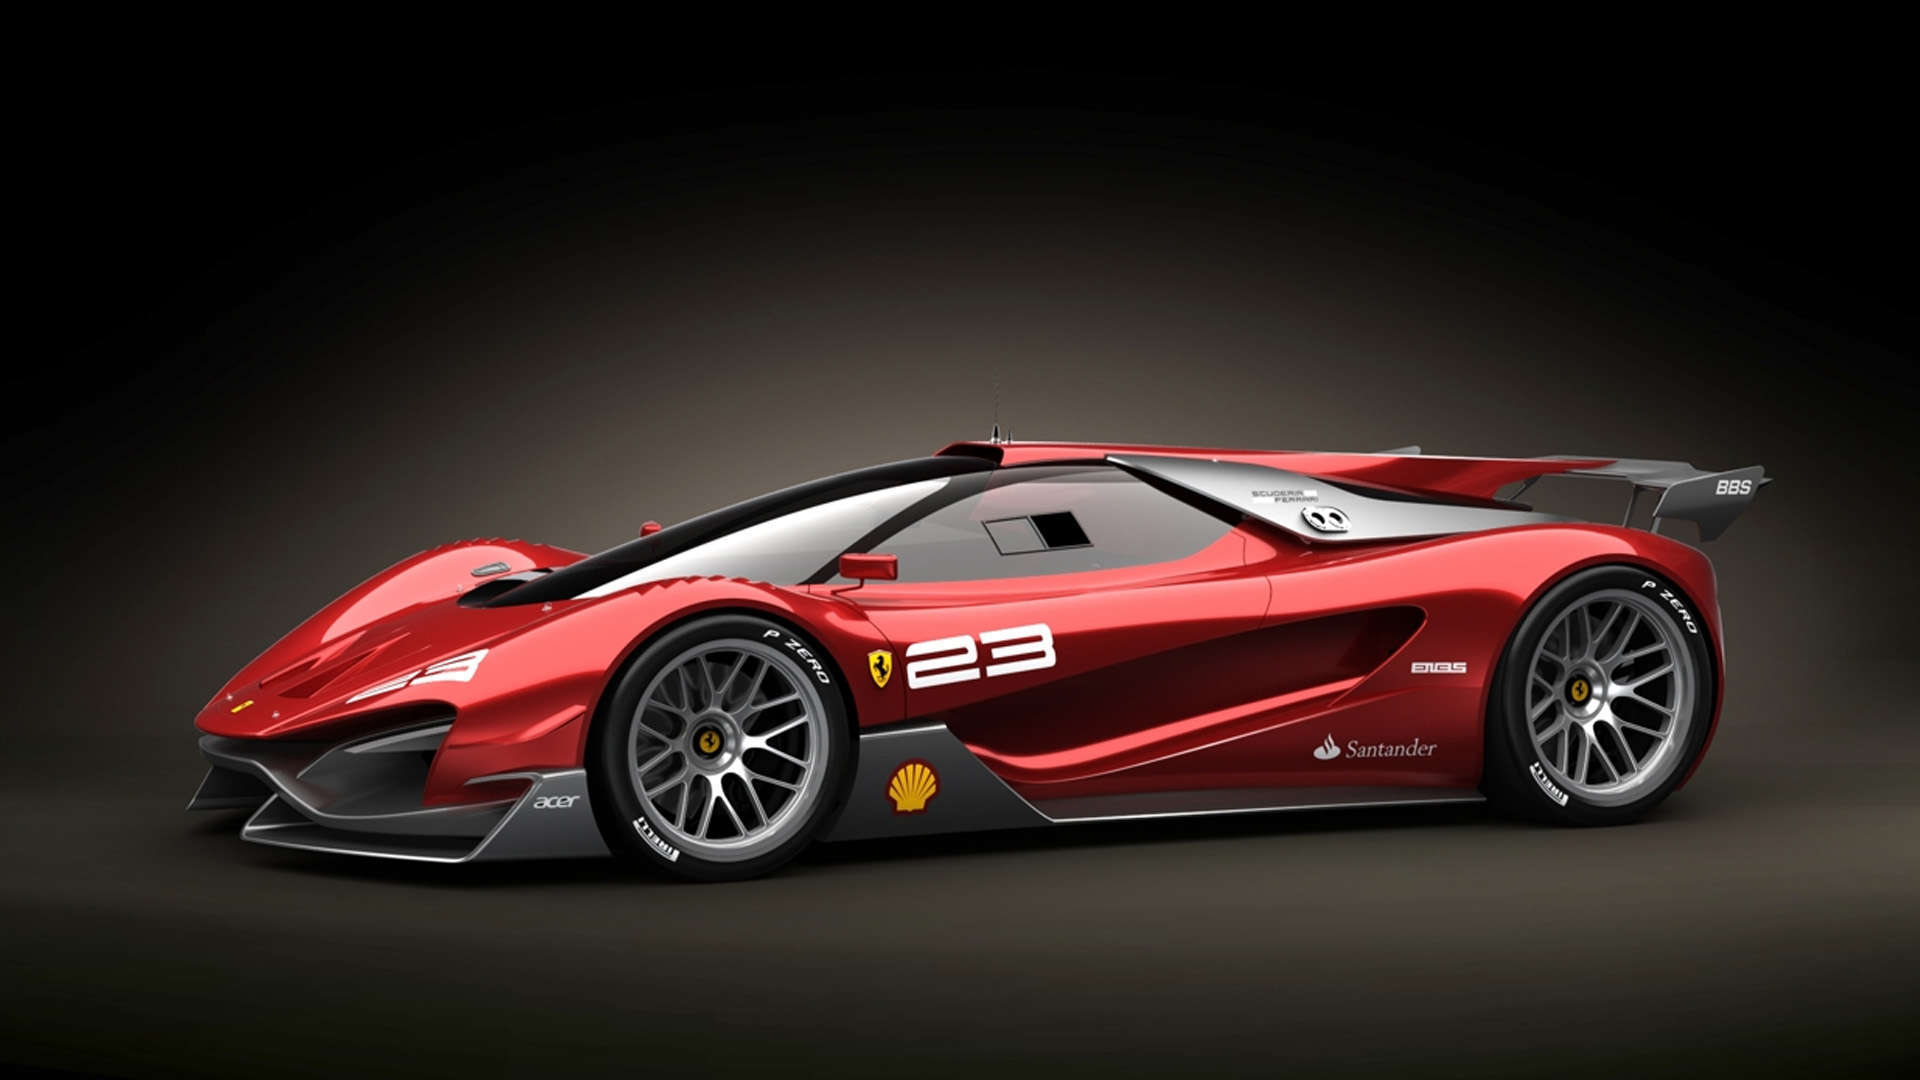 Ferrari Wallpaper Hd 1080p - image #422